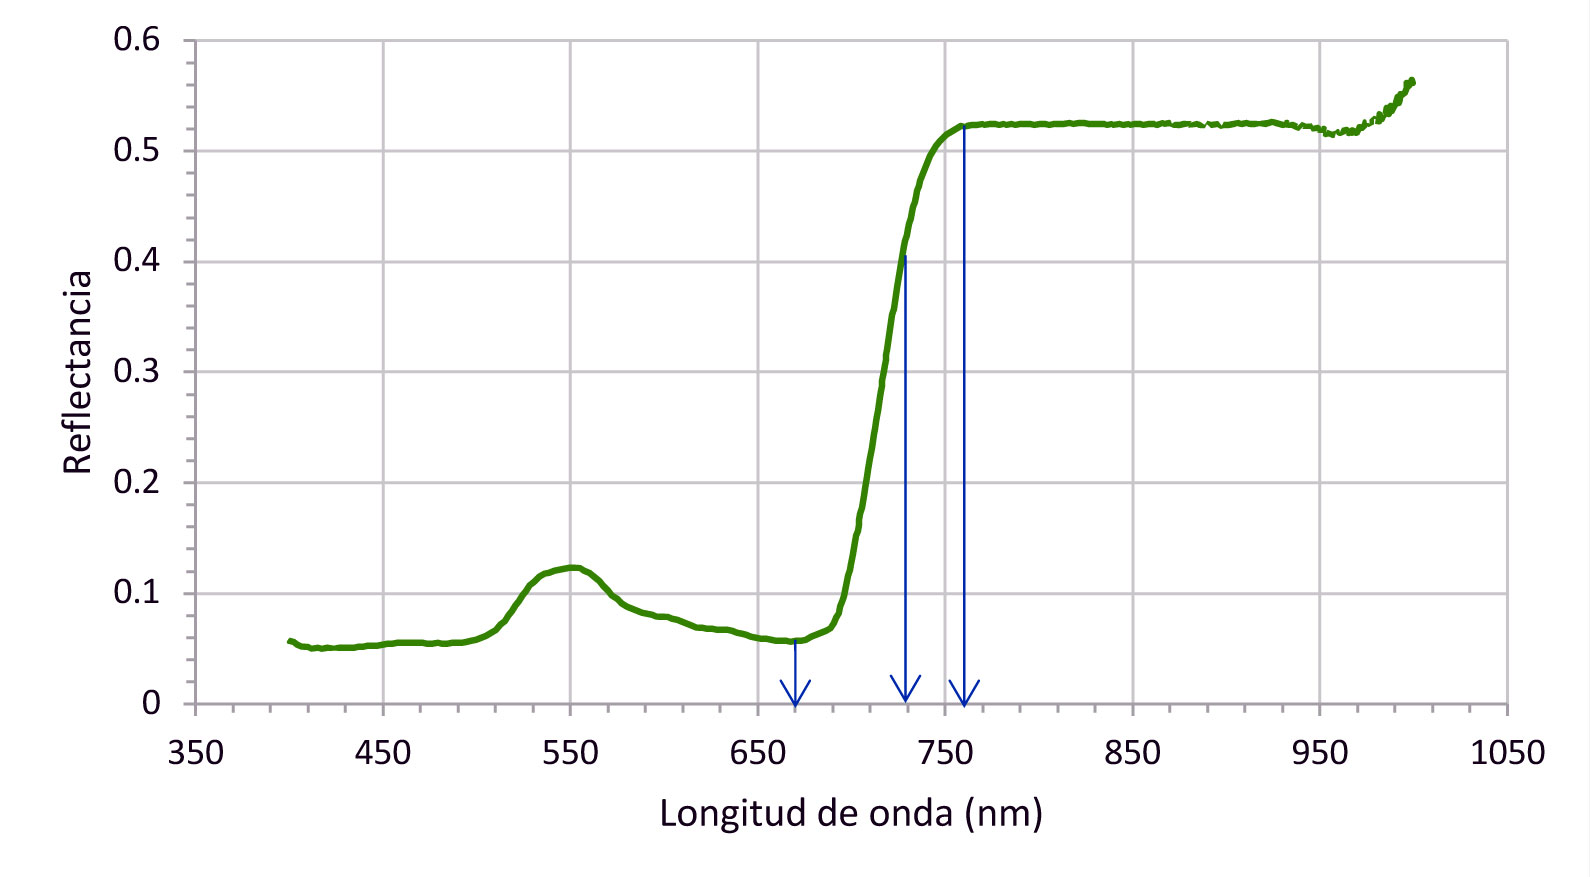 Figura 1: Ejemplo de reflectancia a diferentes longitudes de onda de hojas de espinaca medidas con el sensor hiperespectral CI-710...